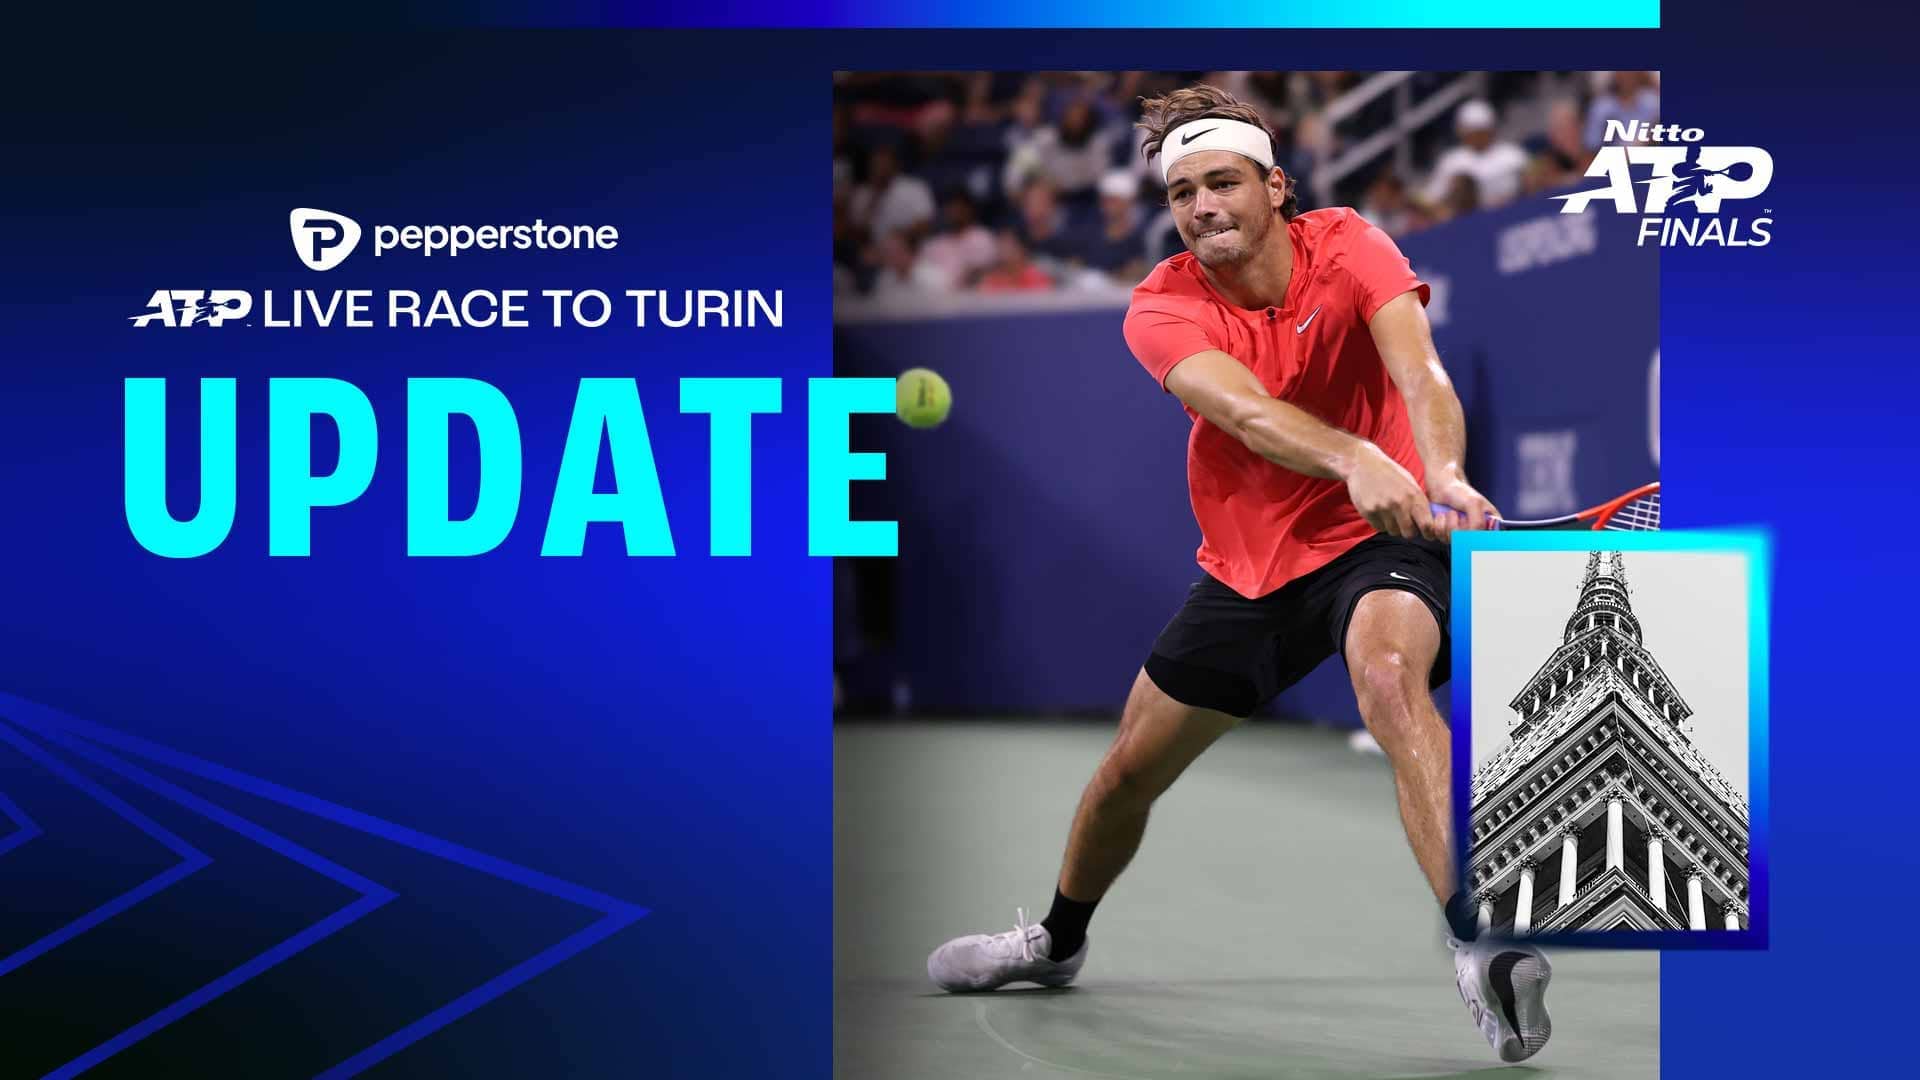 atp tennis tv channel